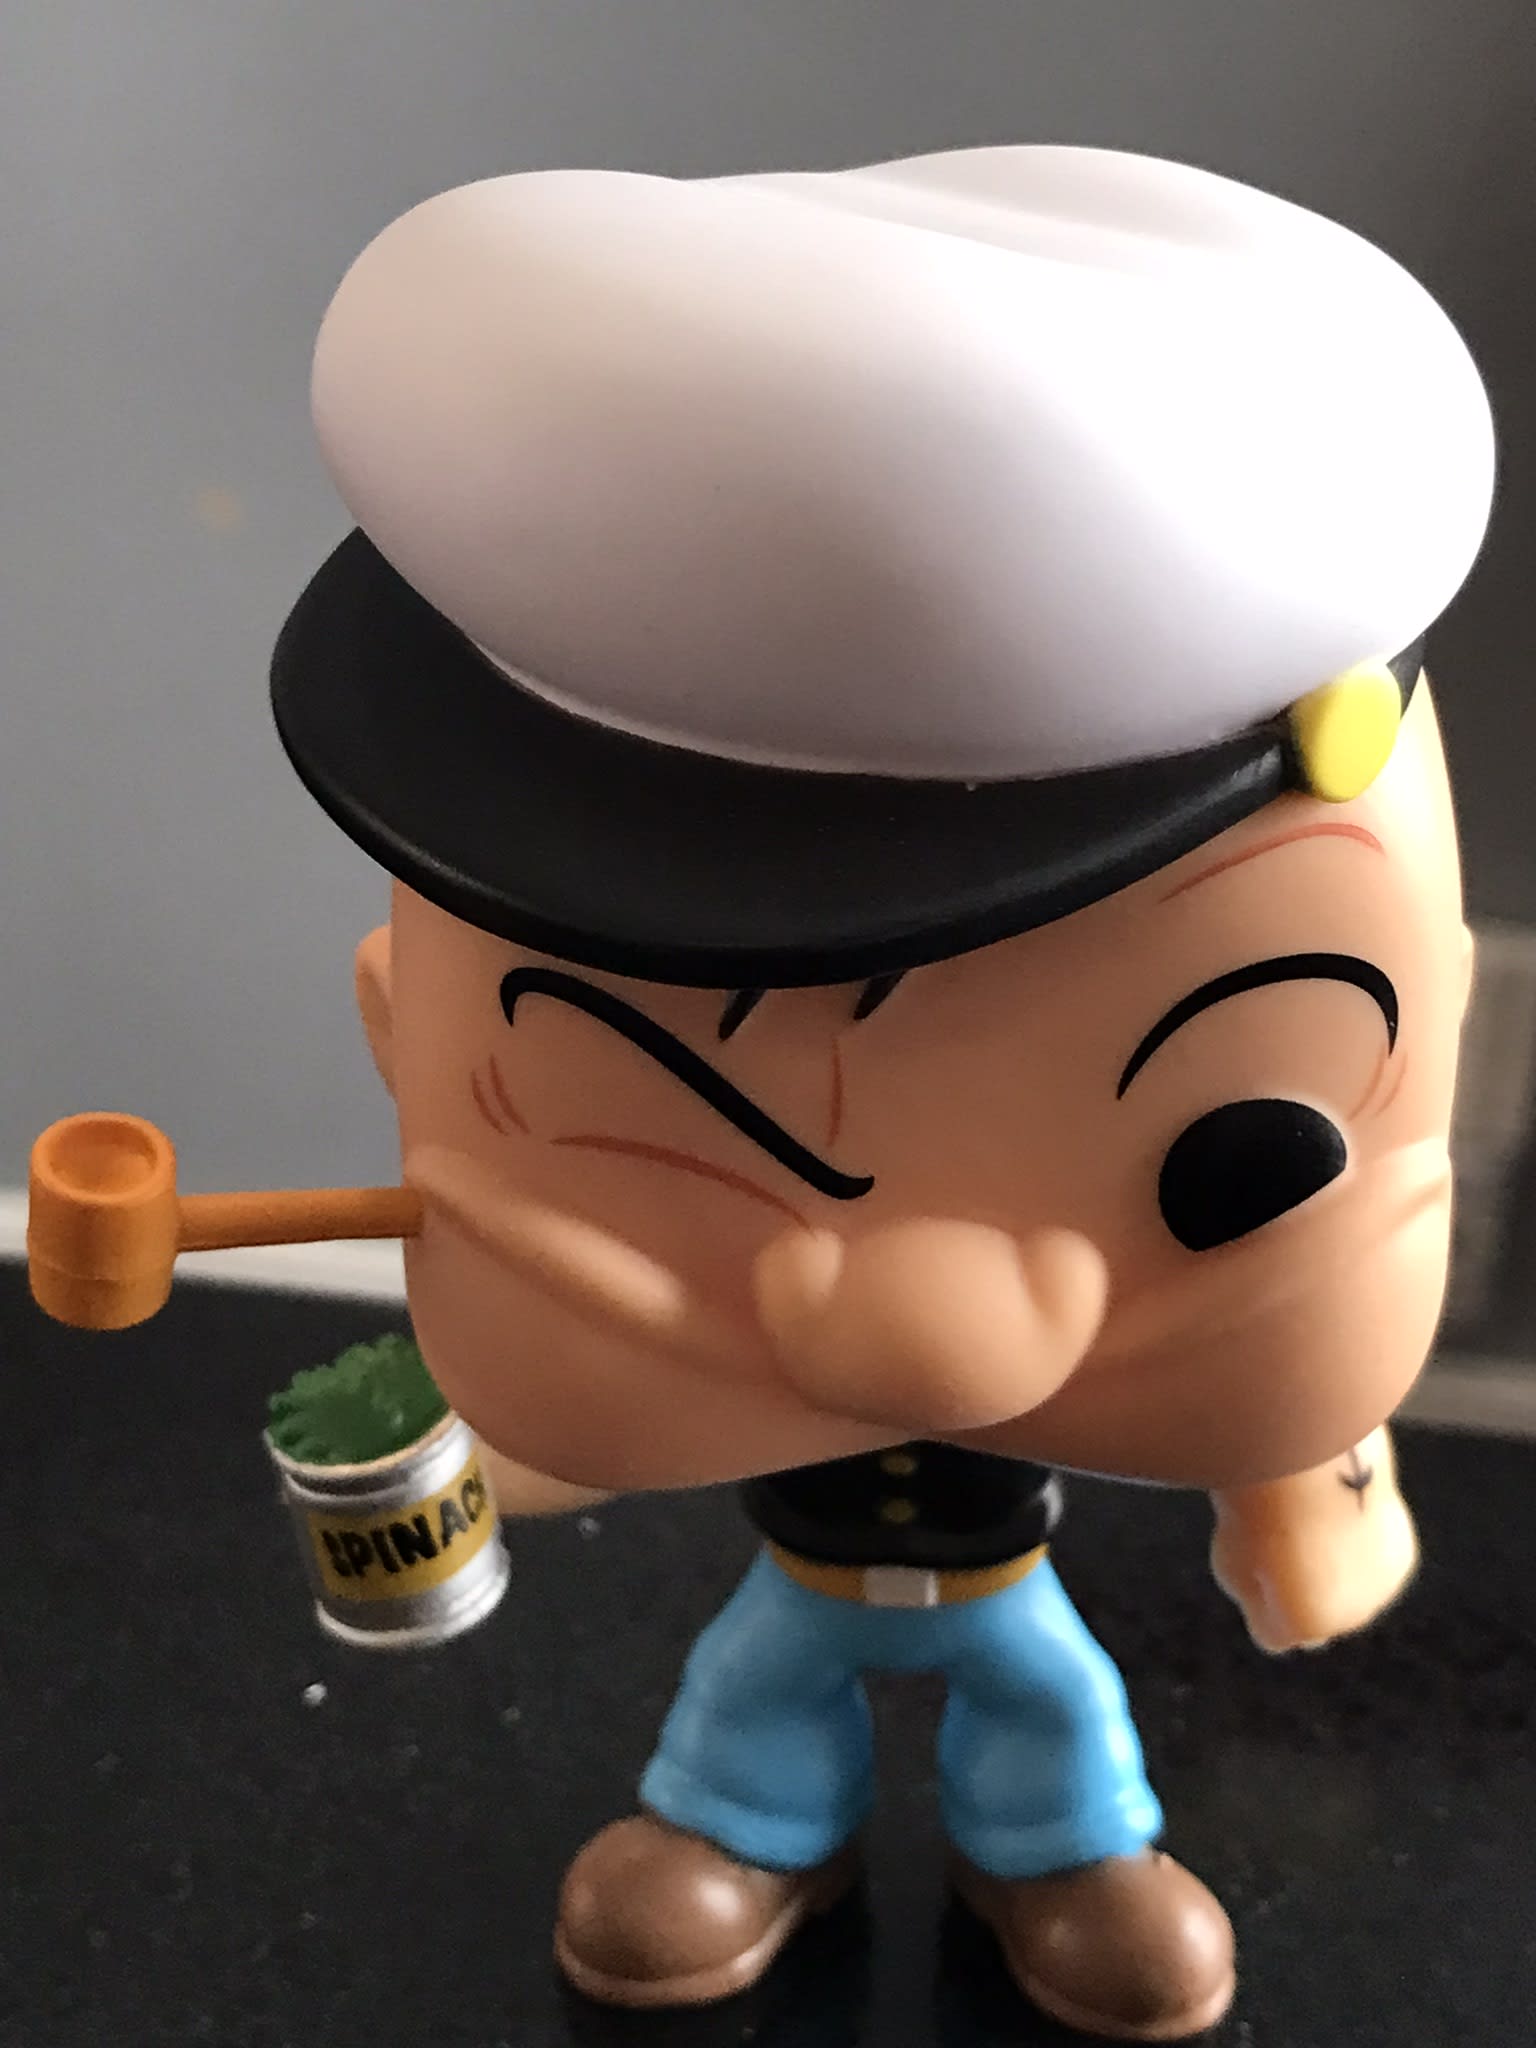 Funko Pop! Animation Popeye Funko Specialty Series Figure #369